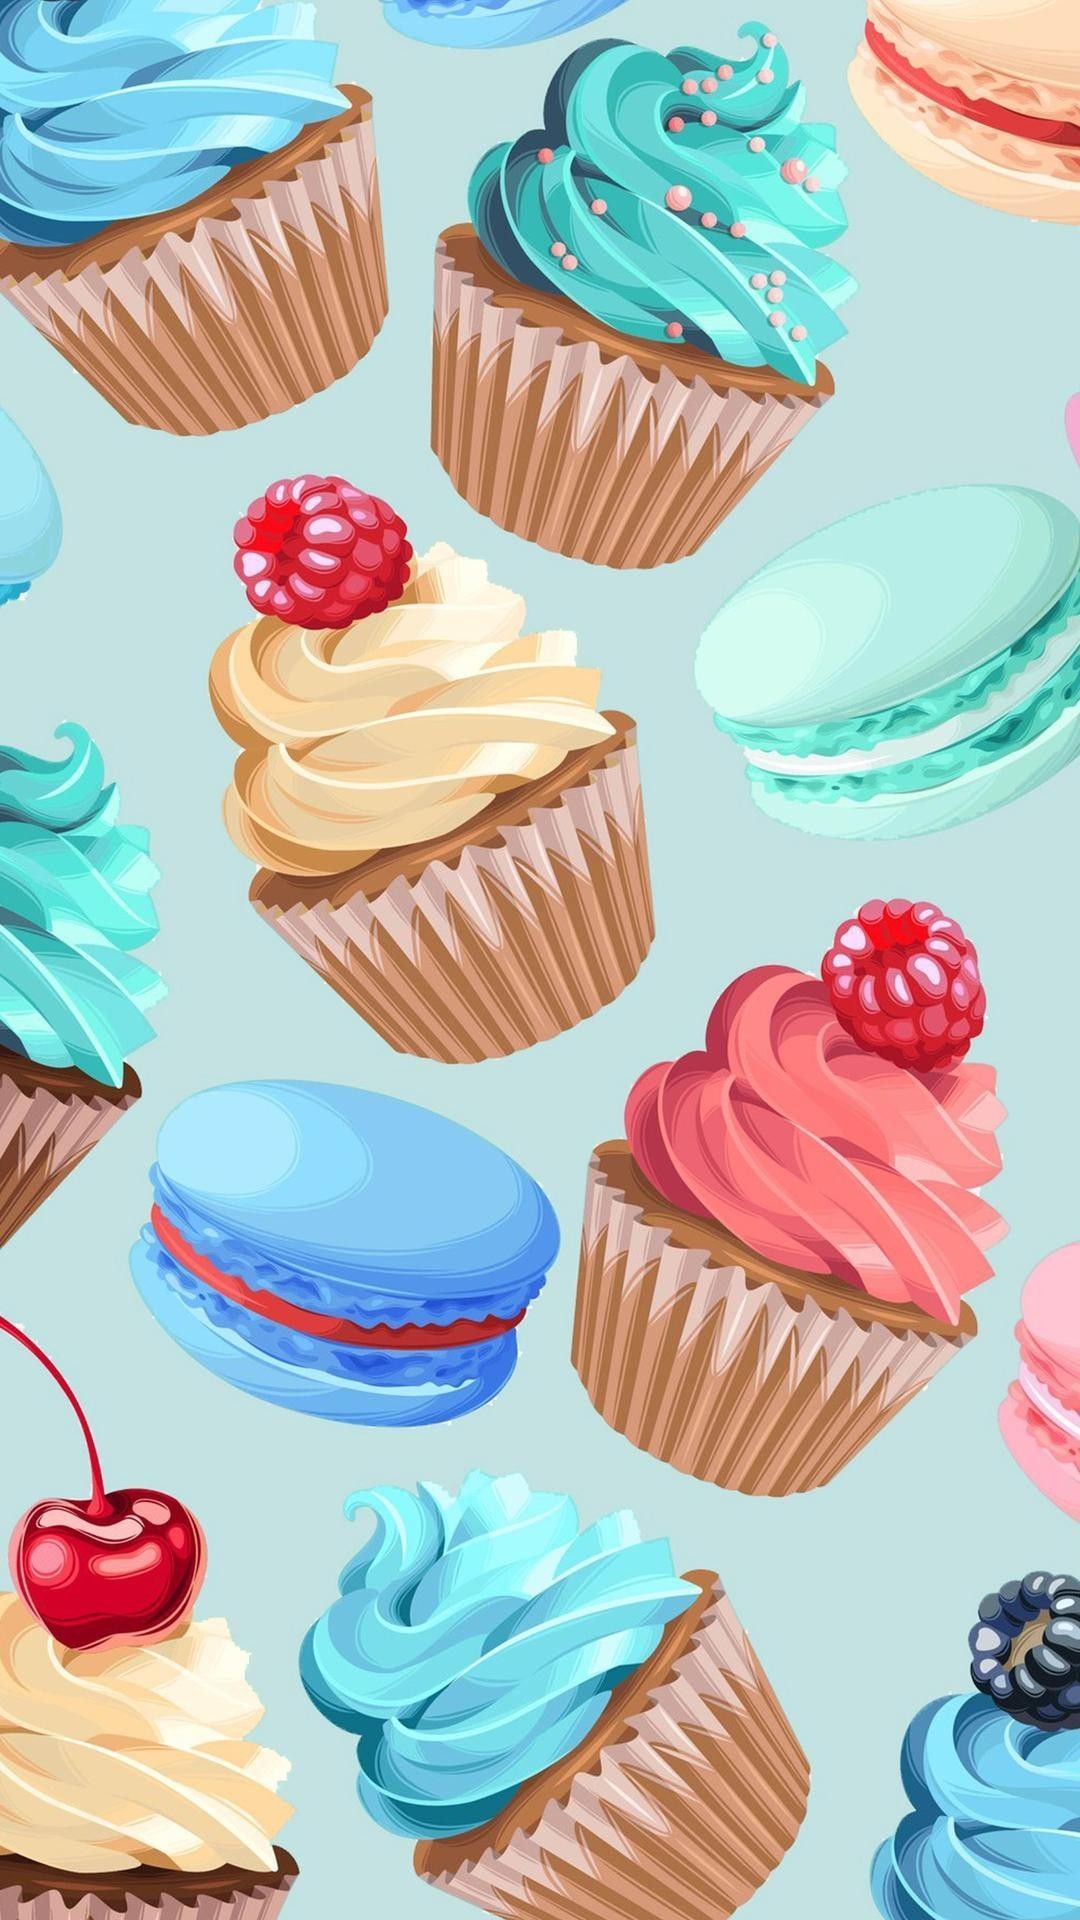 Cupcakes wallpaper .com